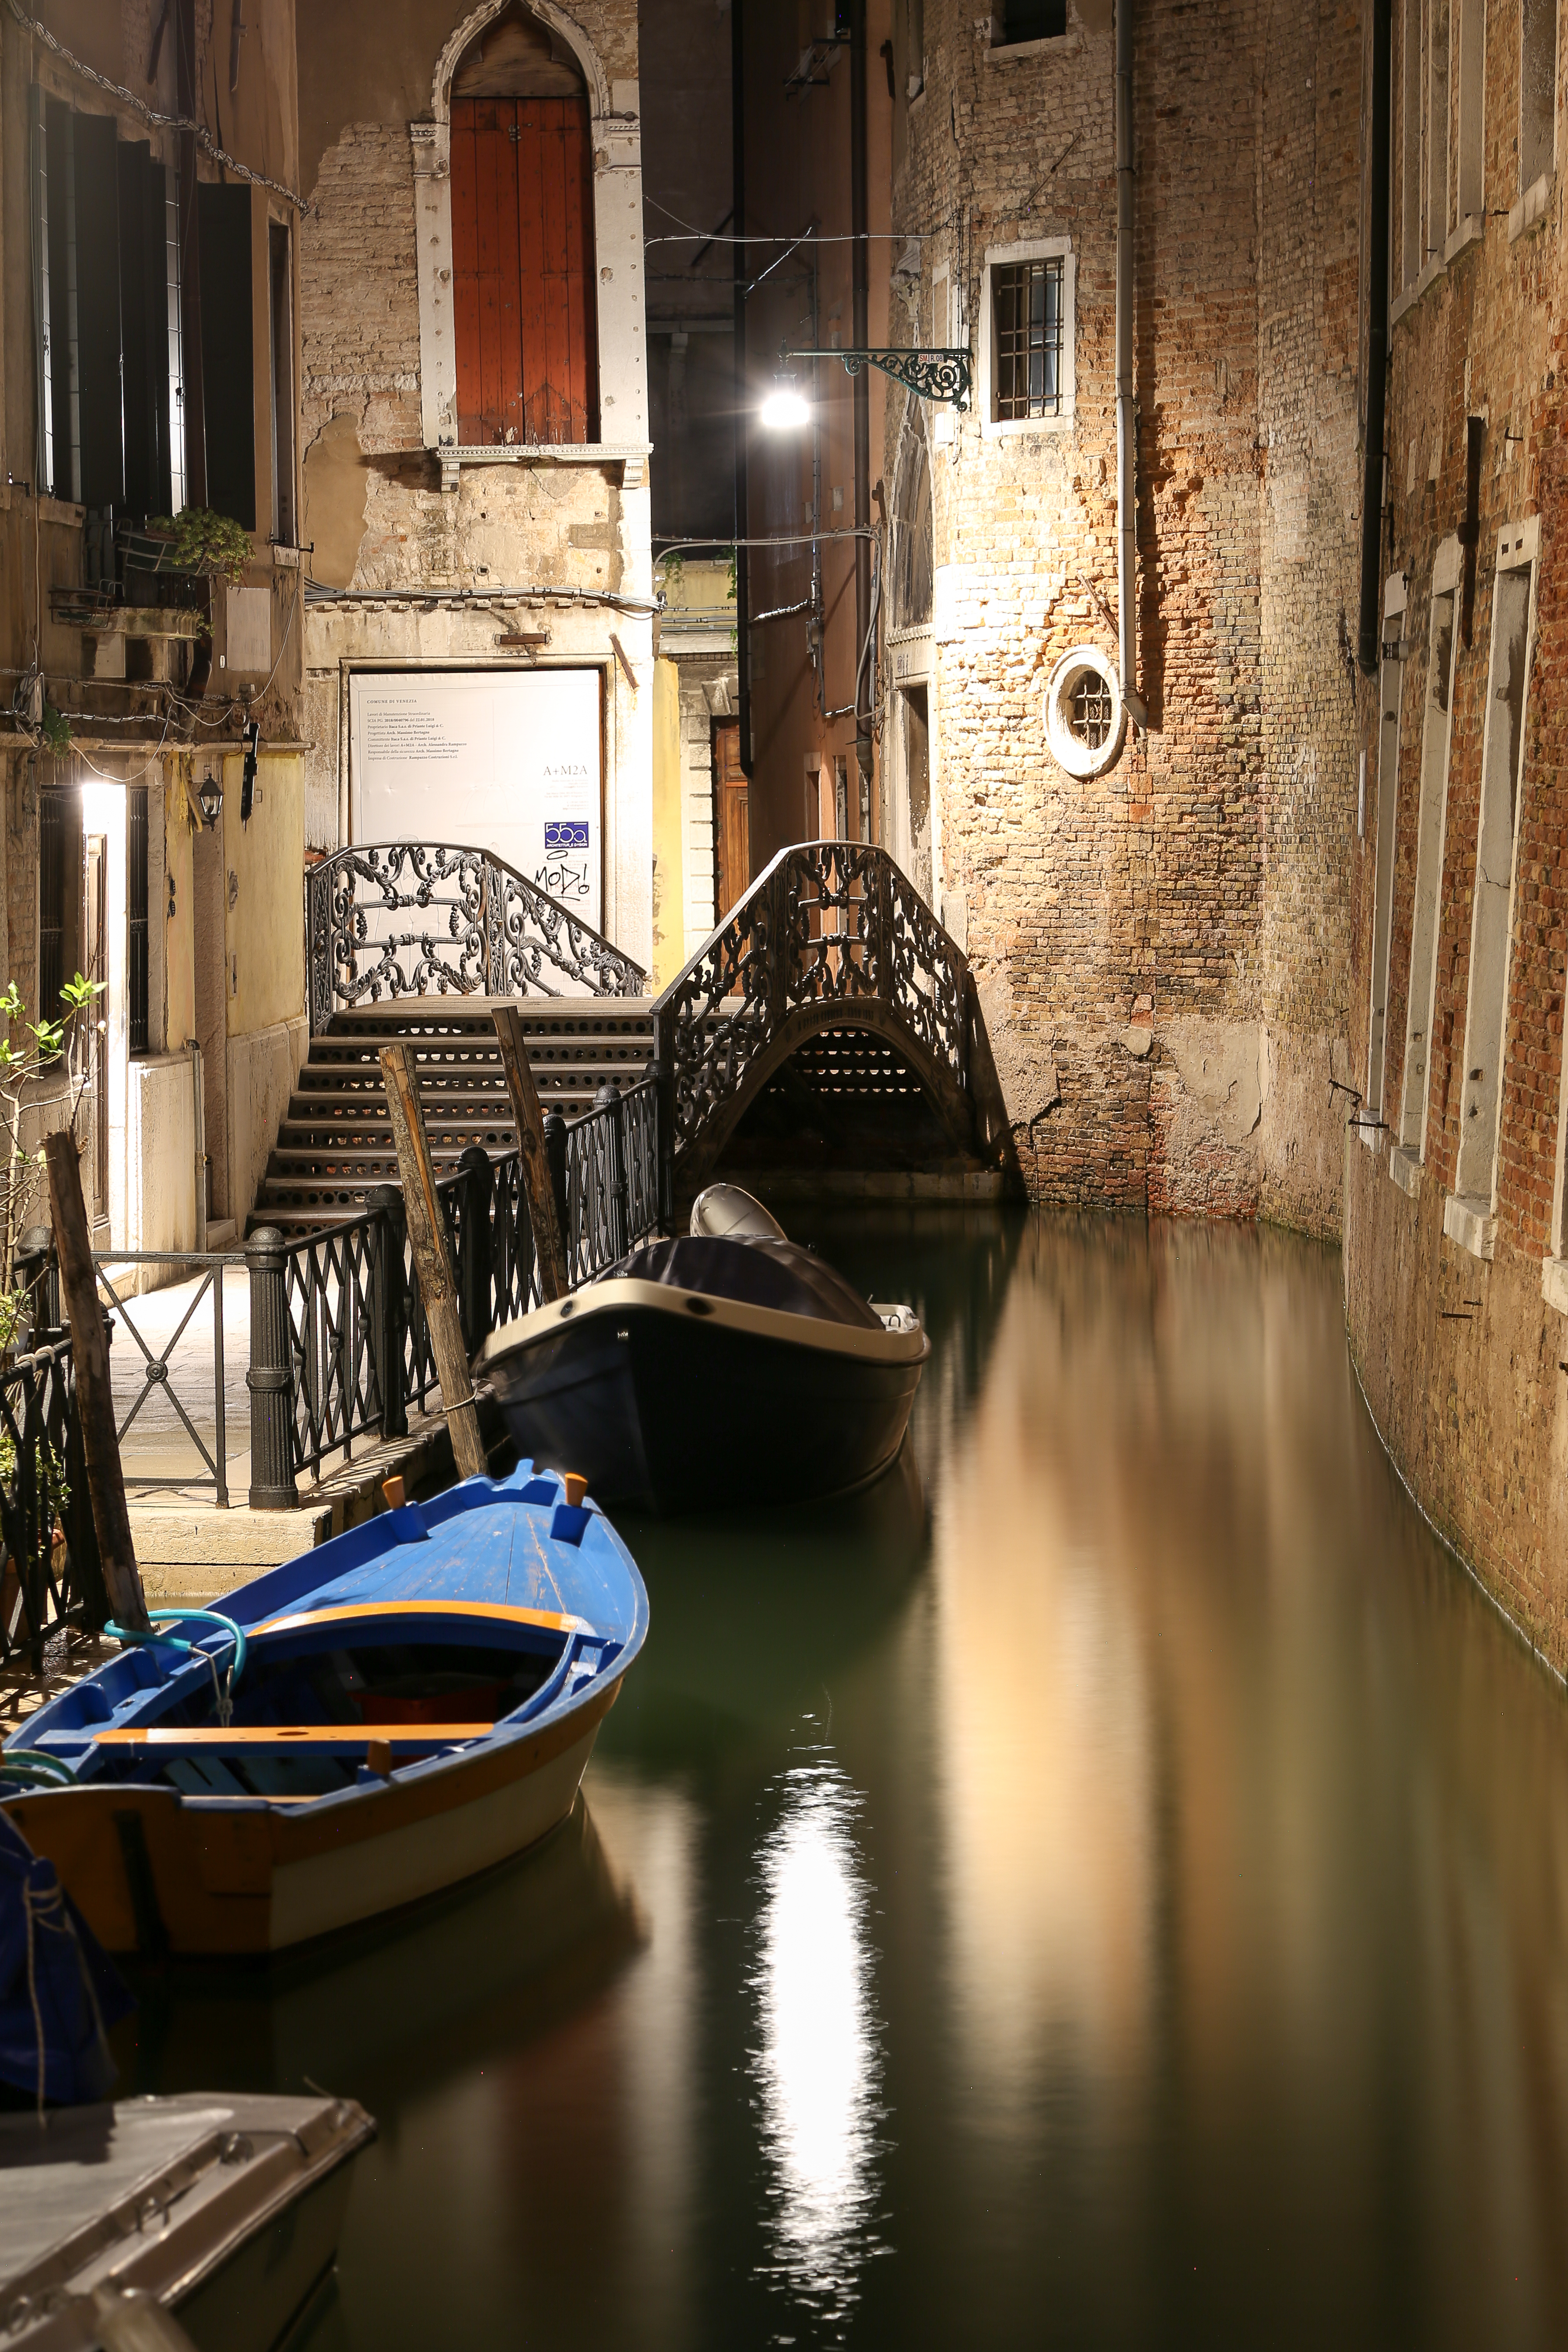 File:Venezia Canali.jpg - Wikimedia Commons